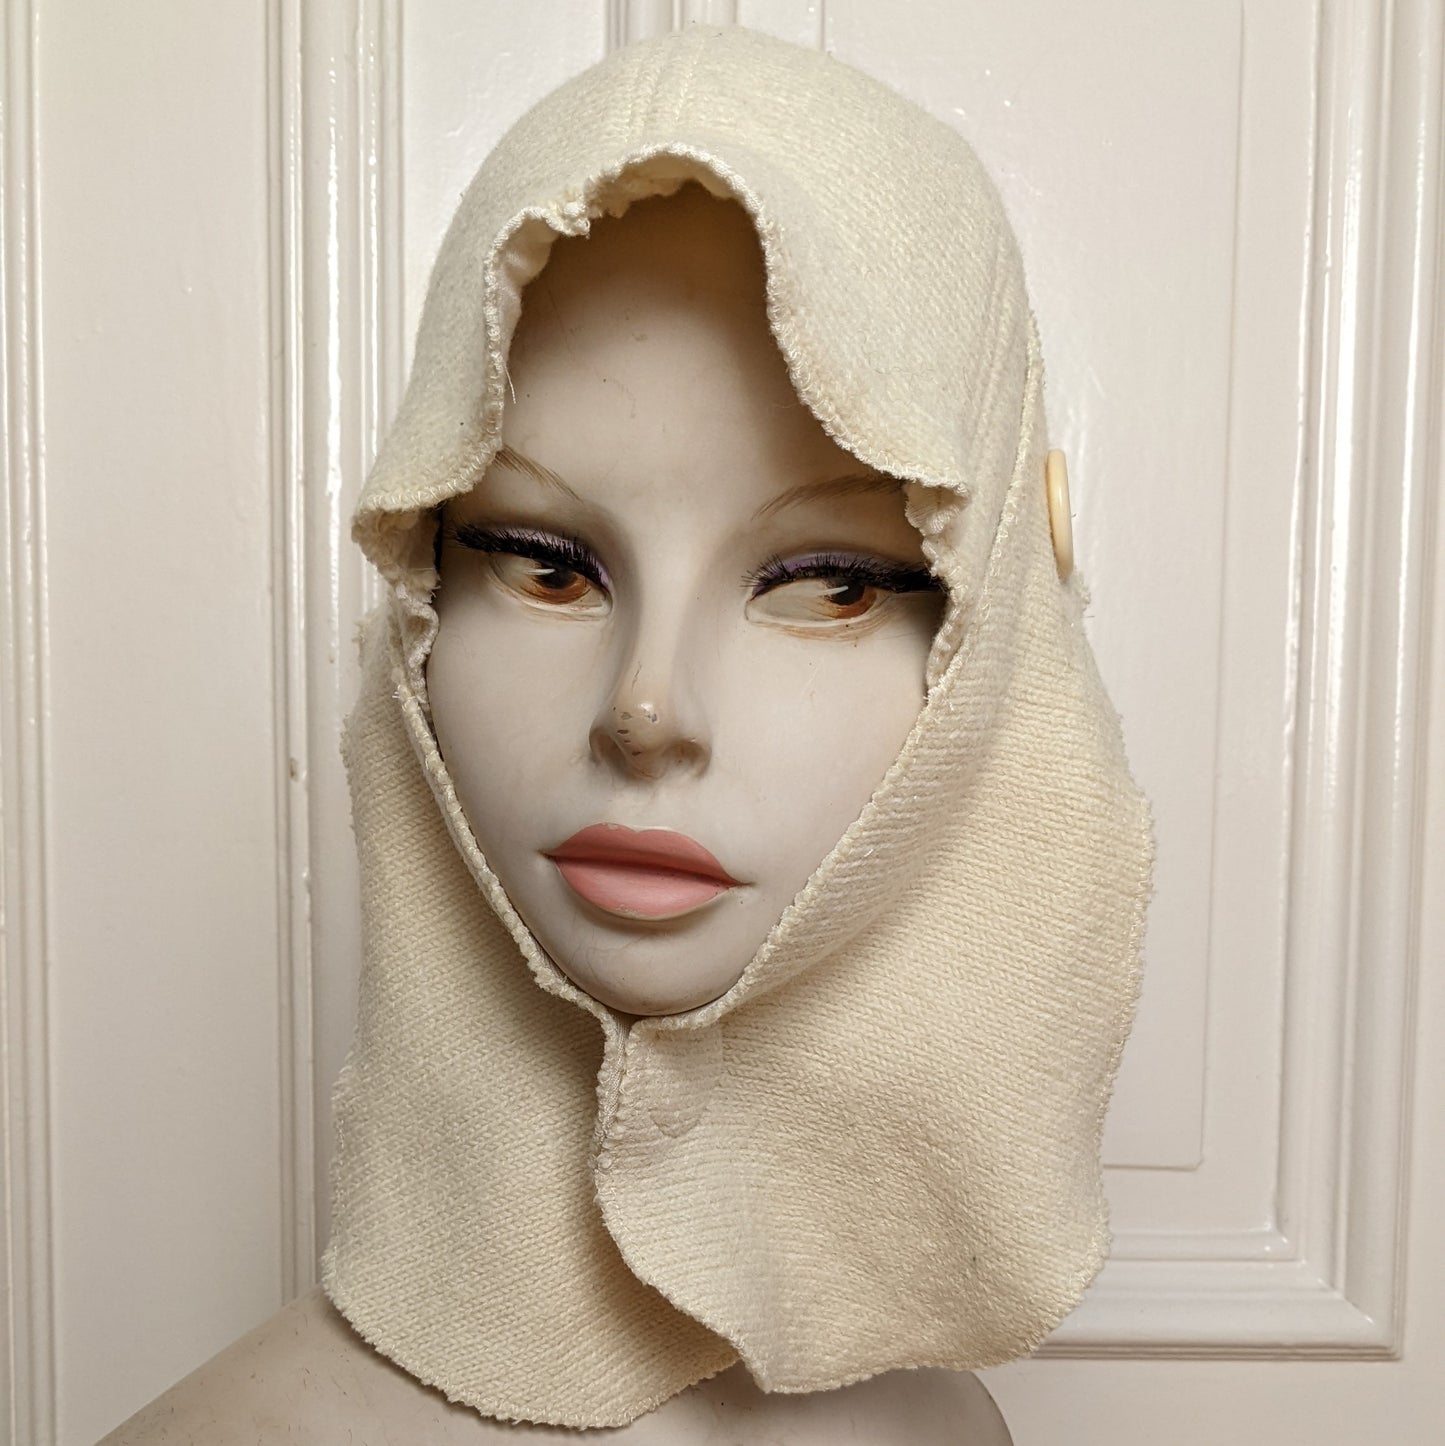 ꒰⑅ᵕ༚ᵕ꒱˖♡ eggshell white virgin wool orchid bonnet ♡˖꒰ᵕ༚ᵕ⑅꒱